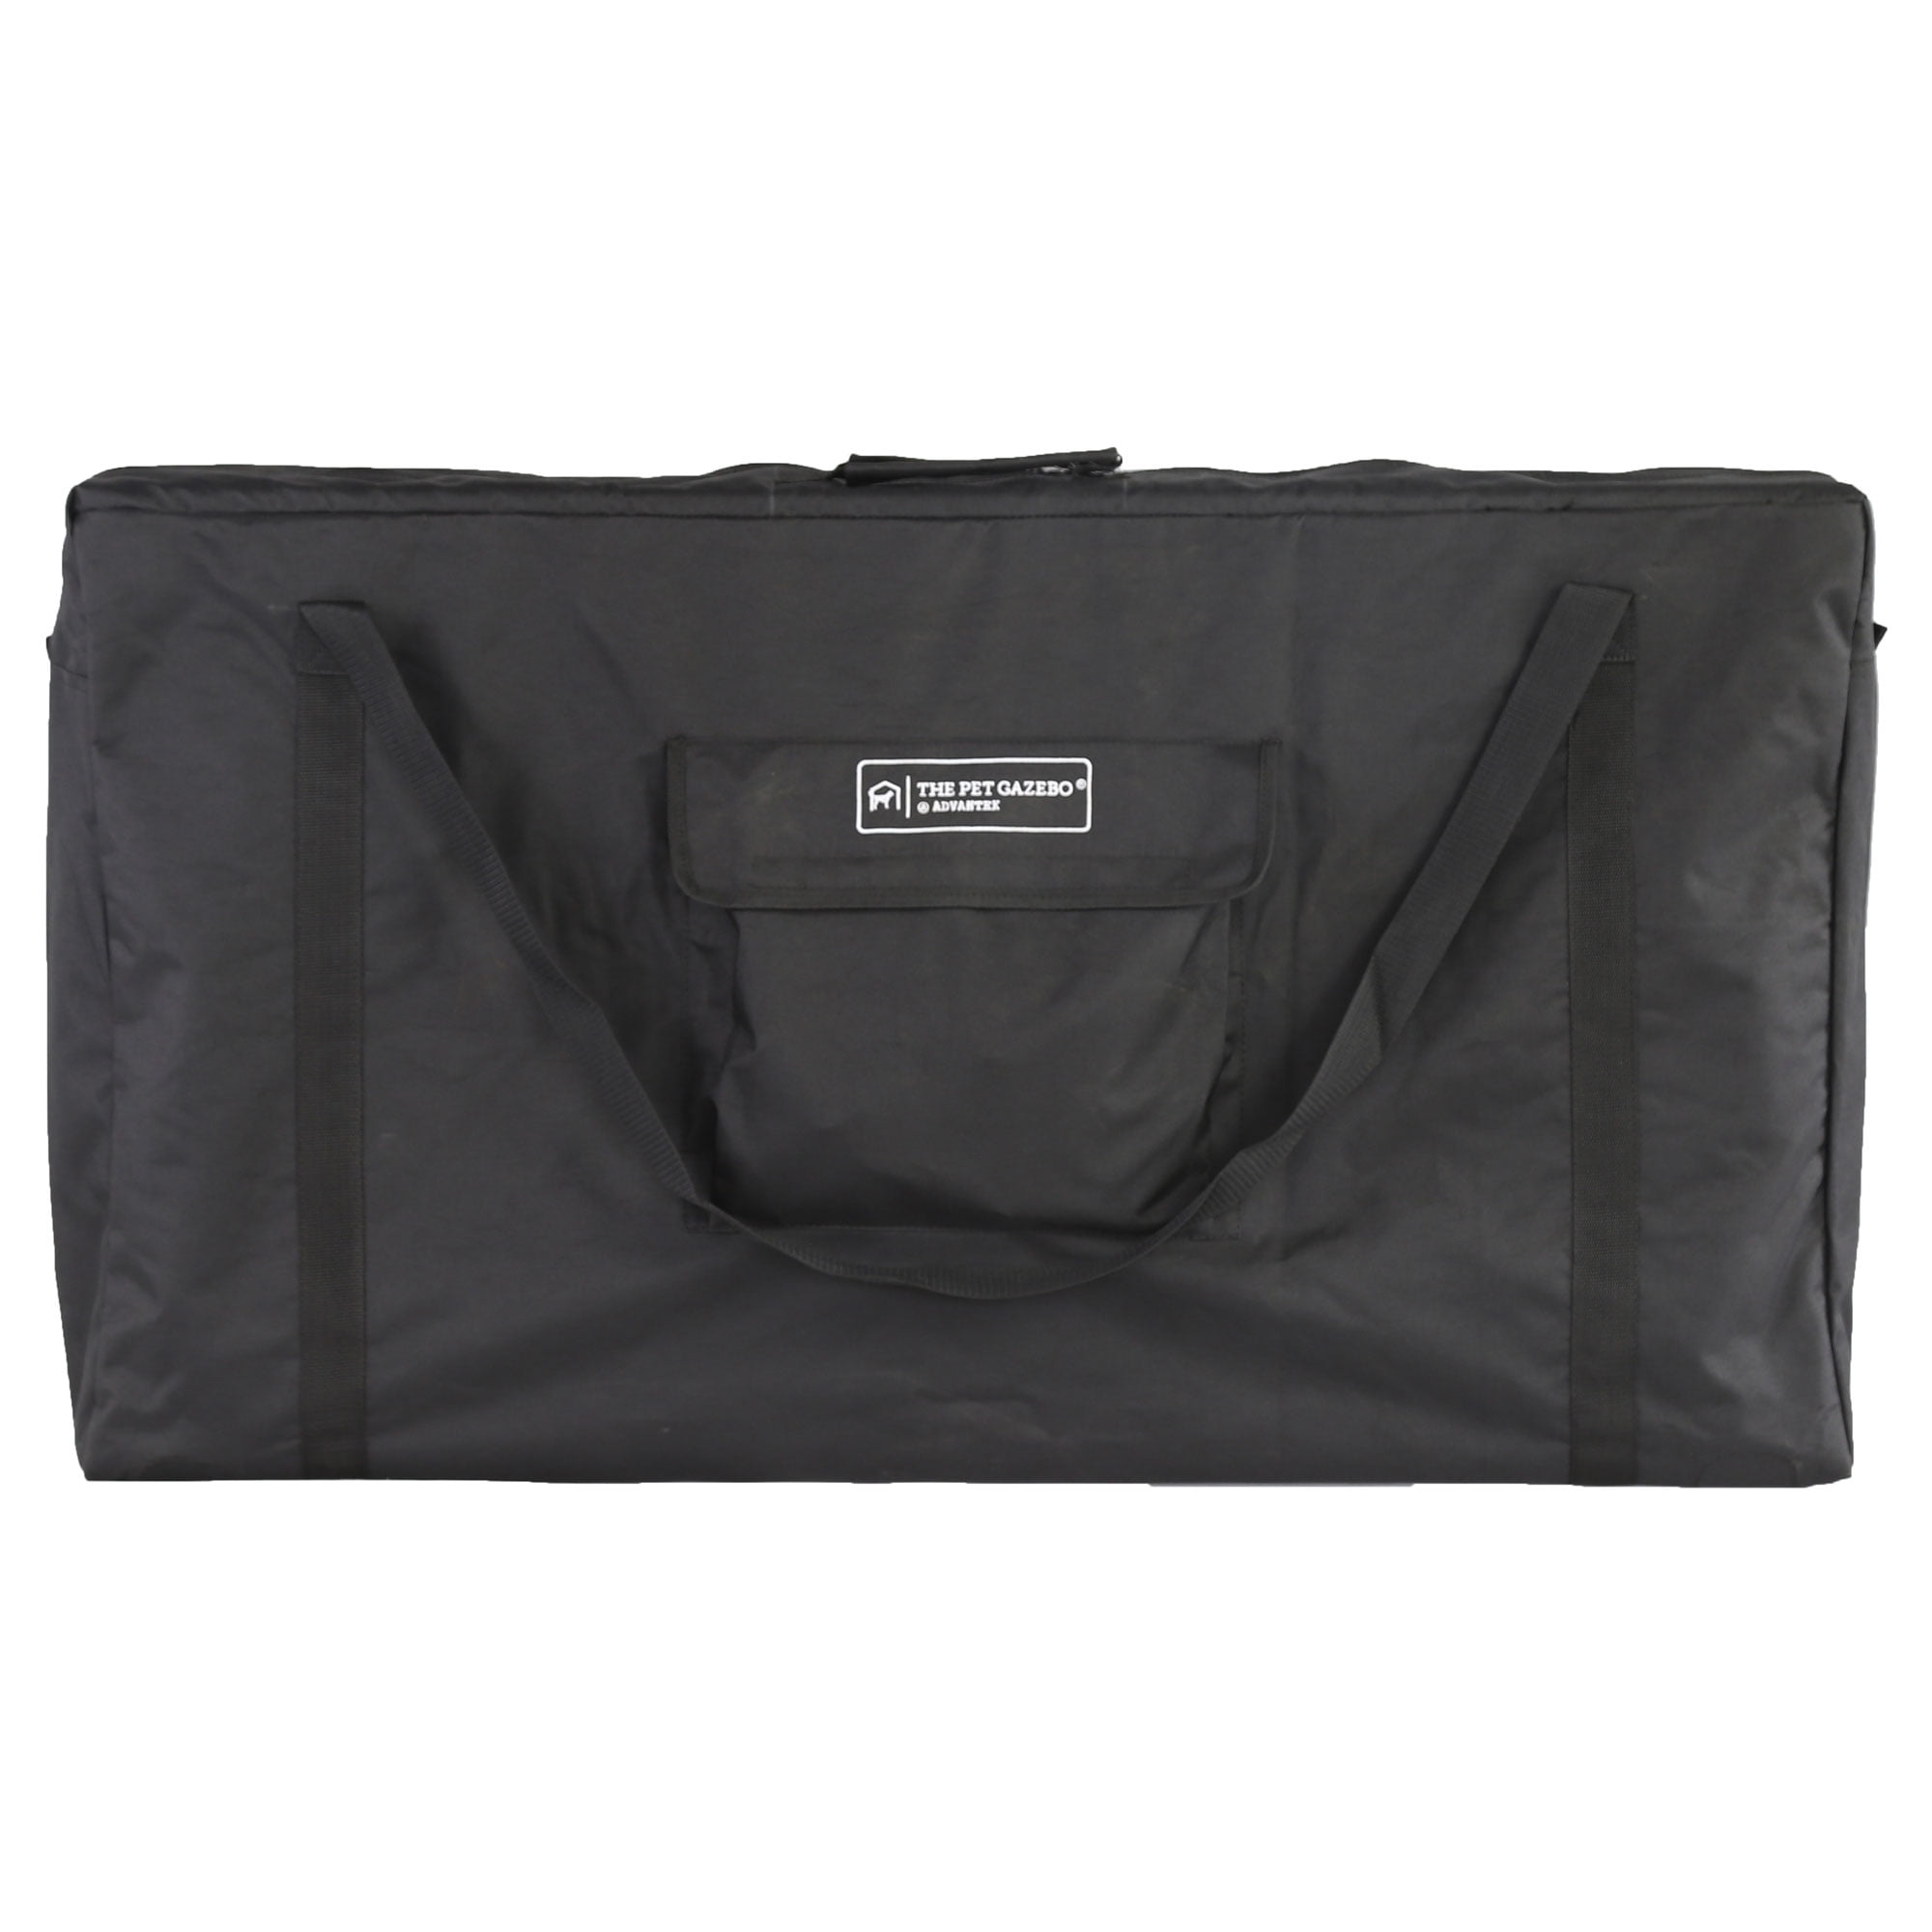 5 Foot Indoor Outdoor Pet Gazebo Heavy Duty Carry Tote Bag, Black